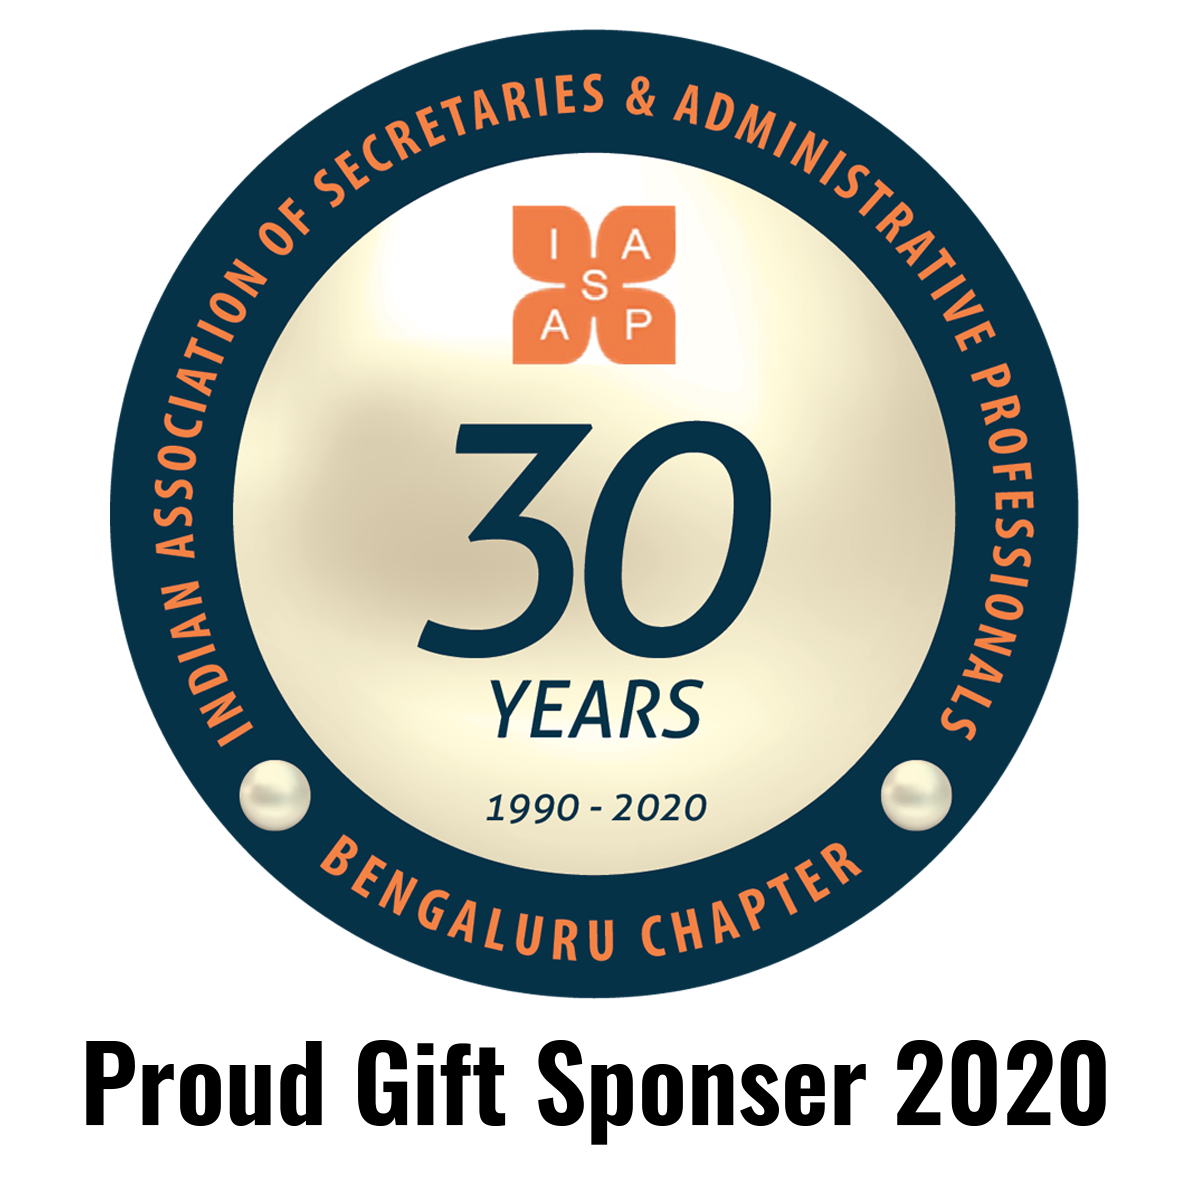 Indian Association of Secretaries & Administrative Professional, Bangalore Chapter, 30 Years